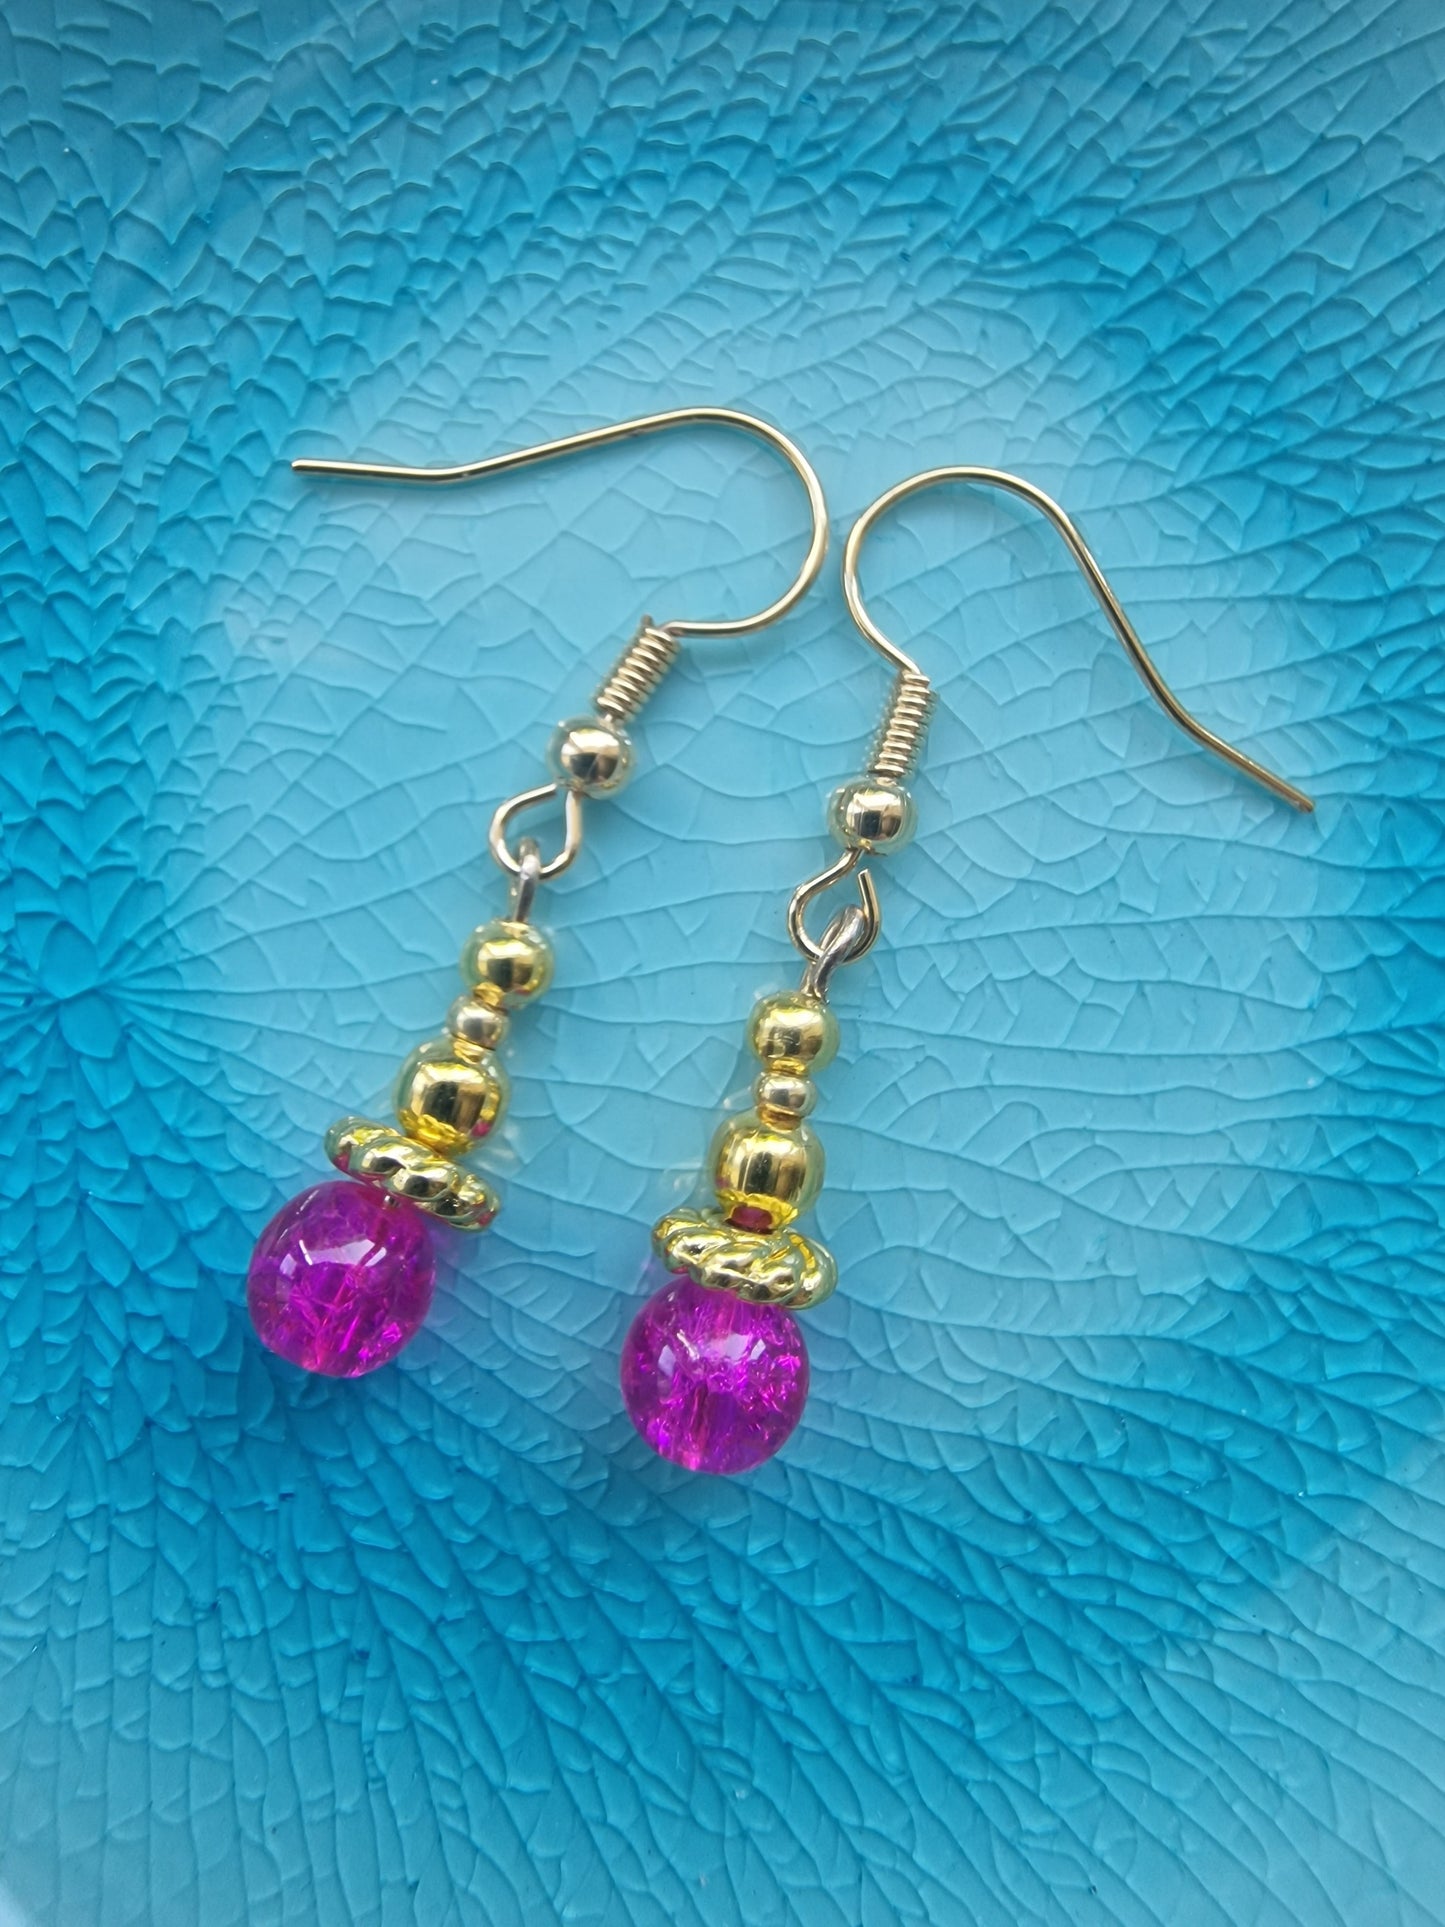 Fuchsia and gold dainty drop earrings